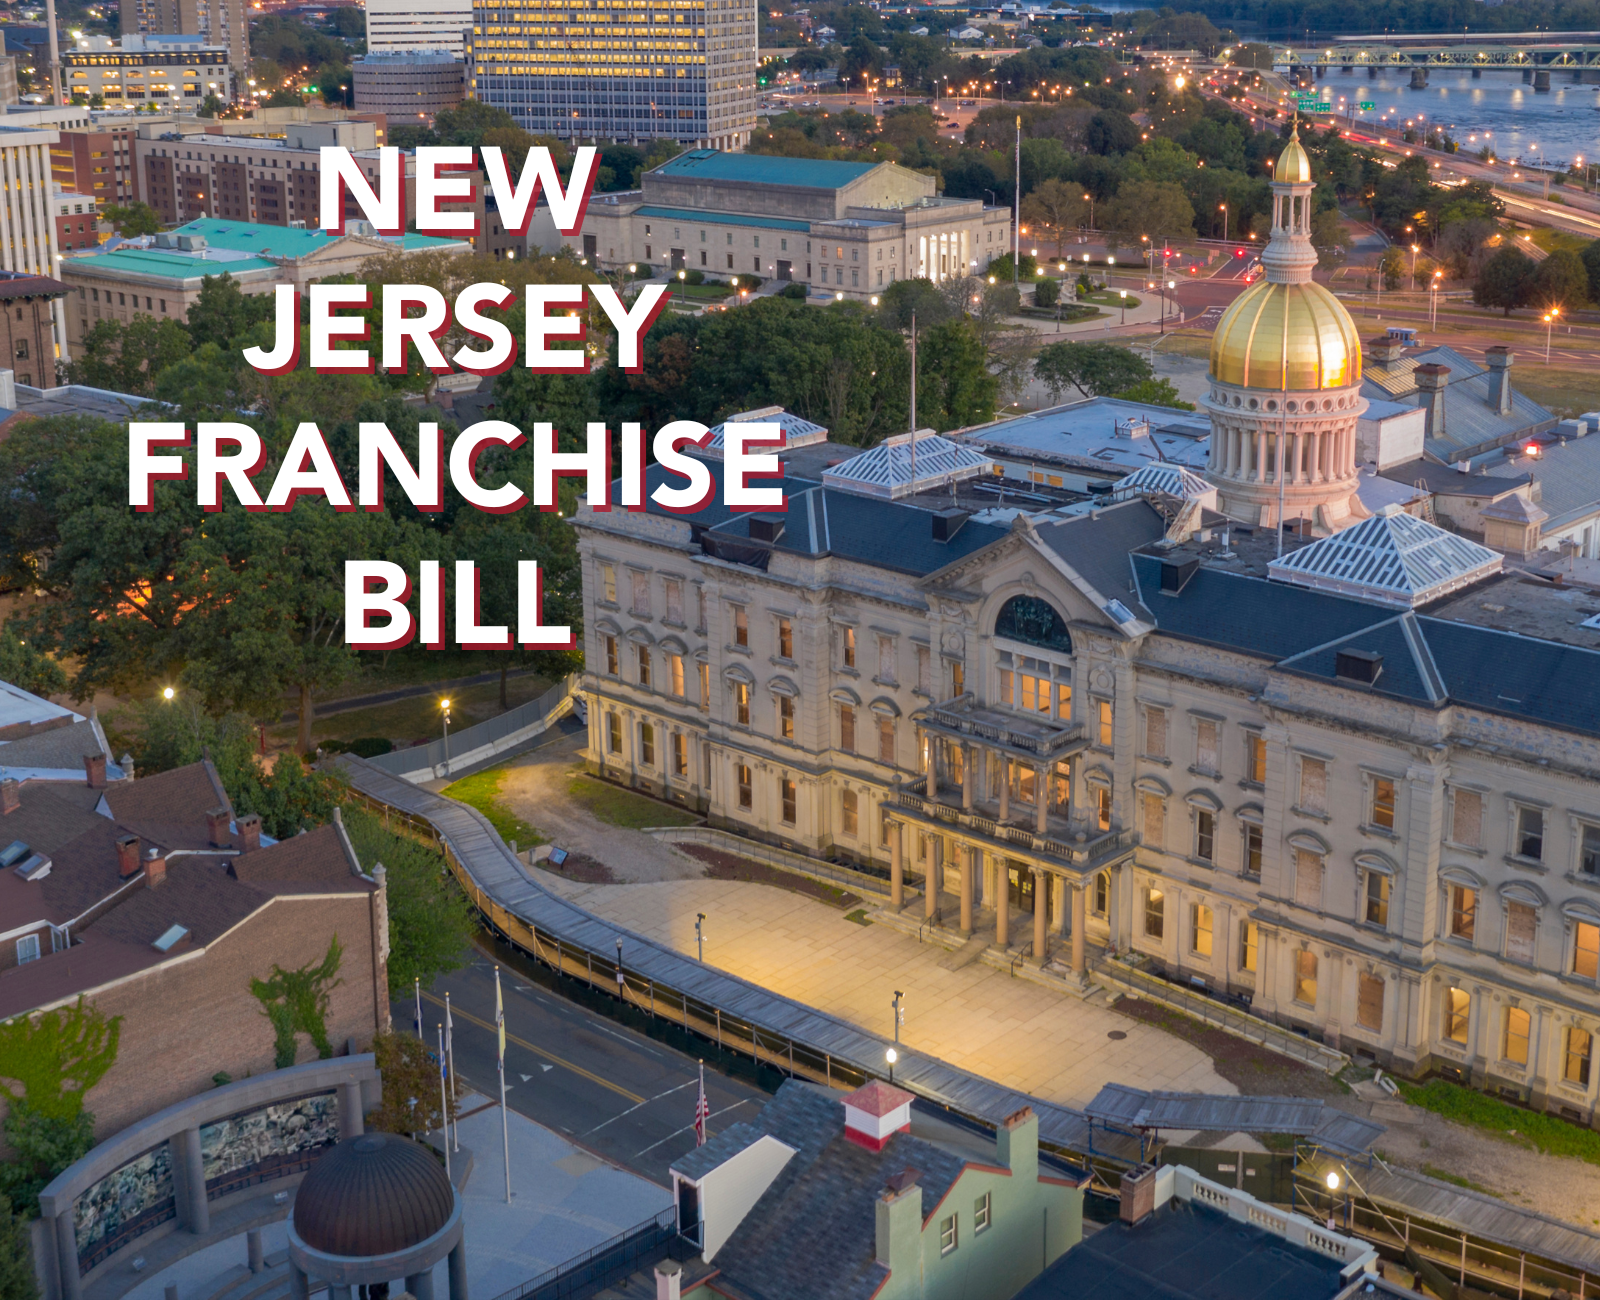 New Jersey franchise bill